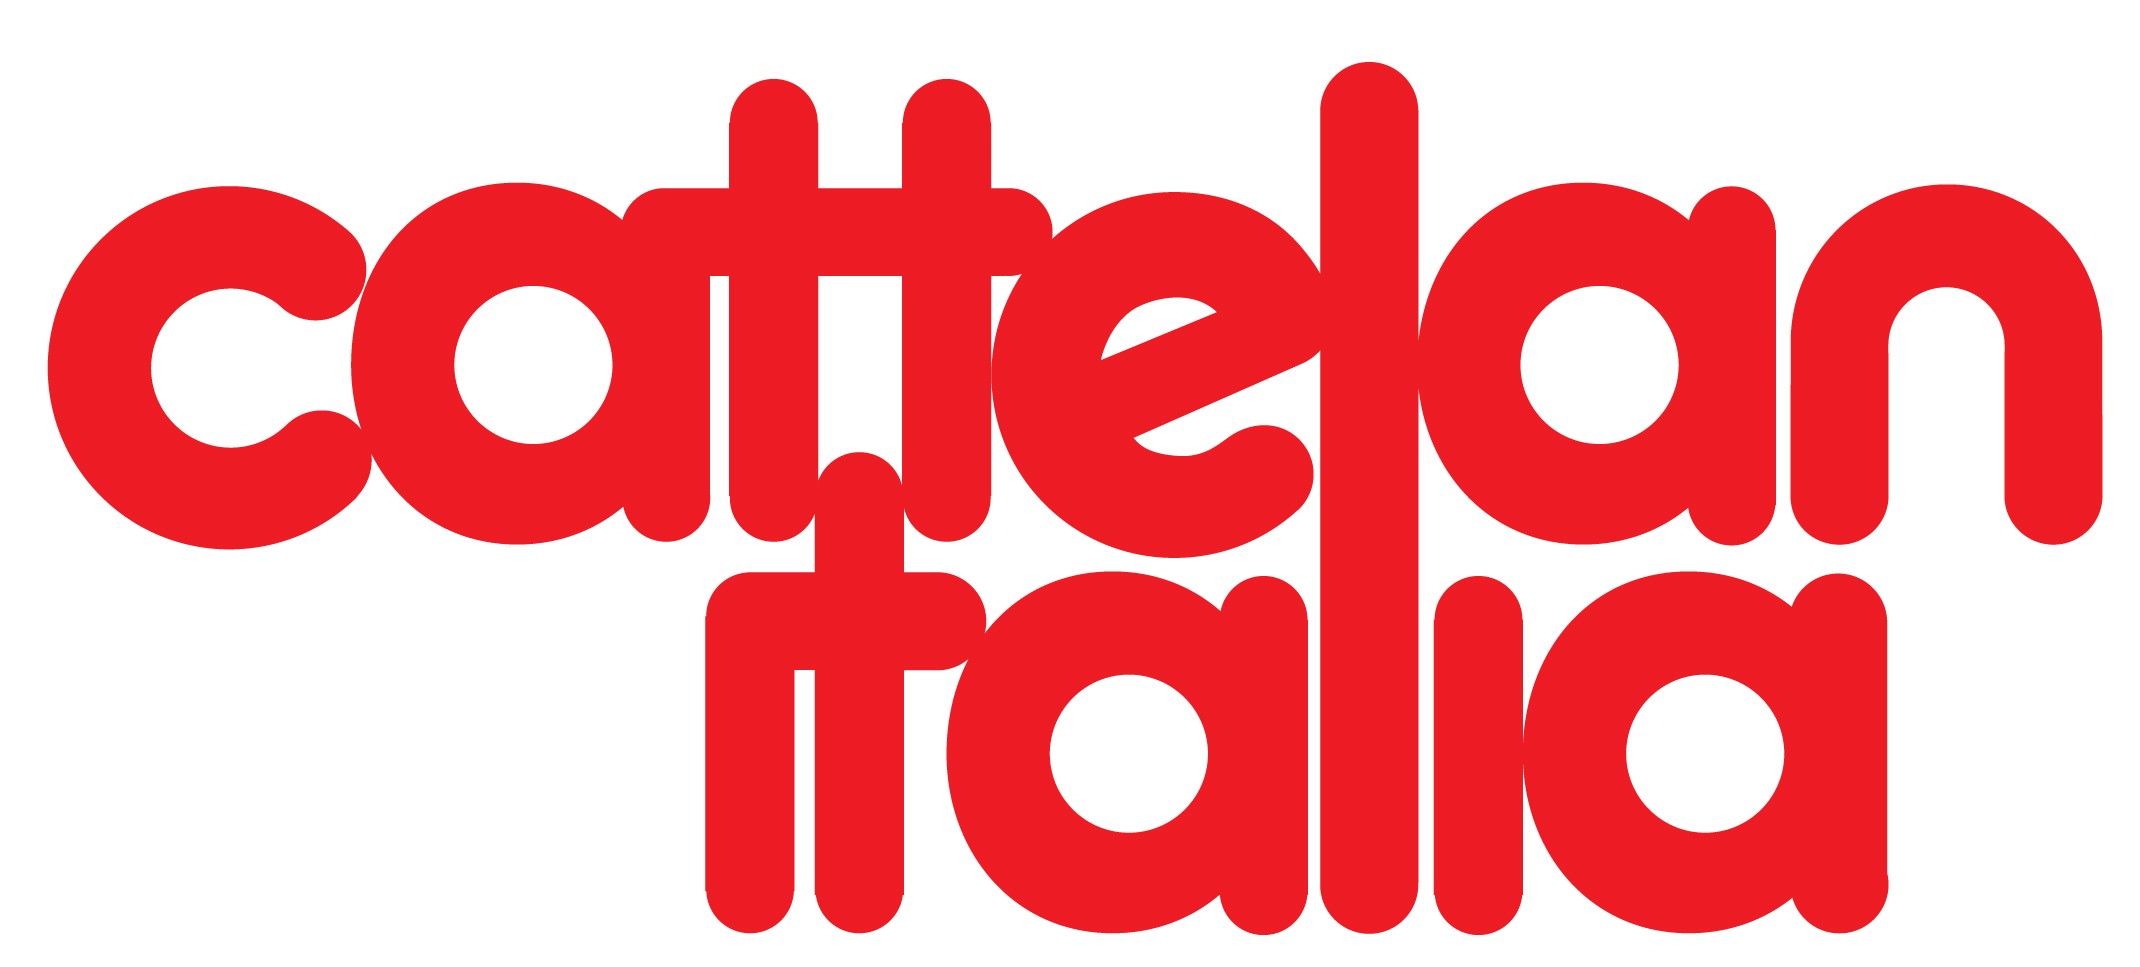 Immagine inerente al logo del produttore Cattelan Italia per arredi